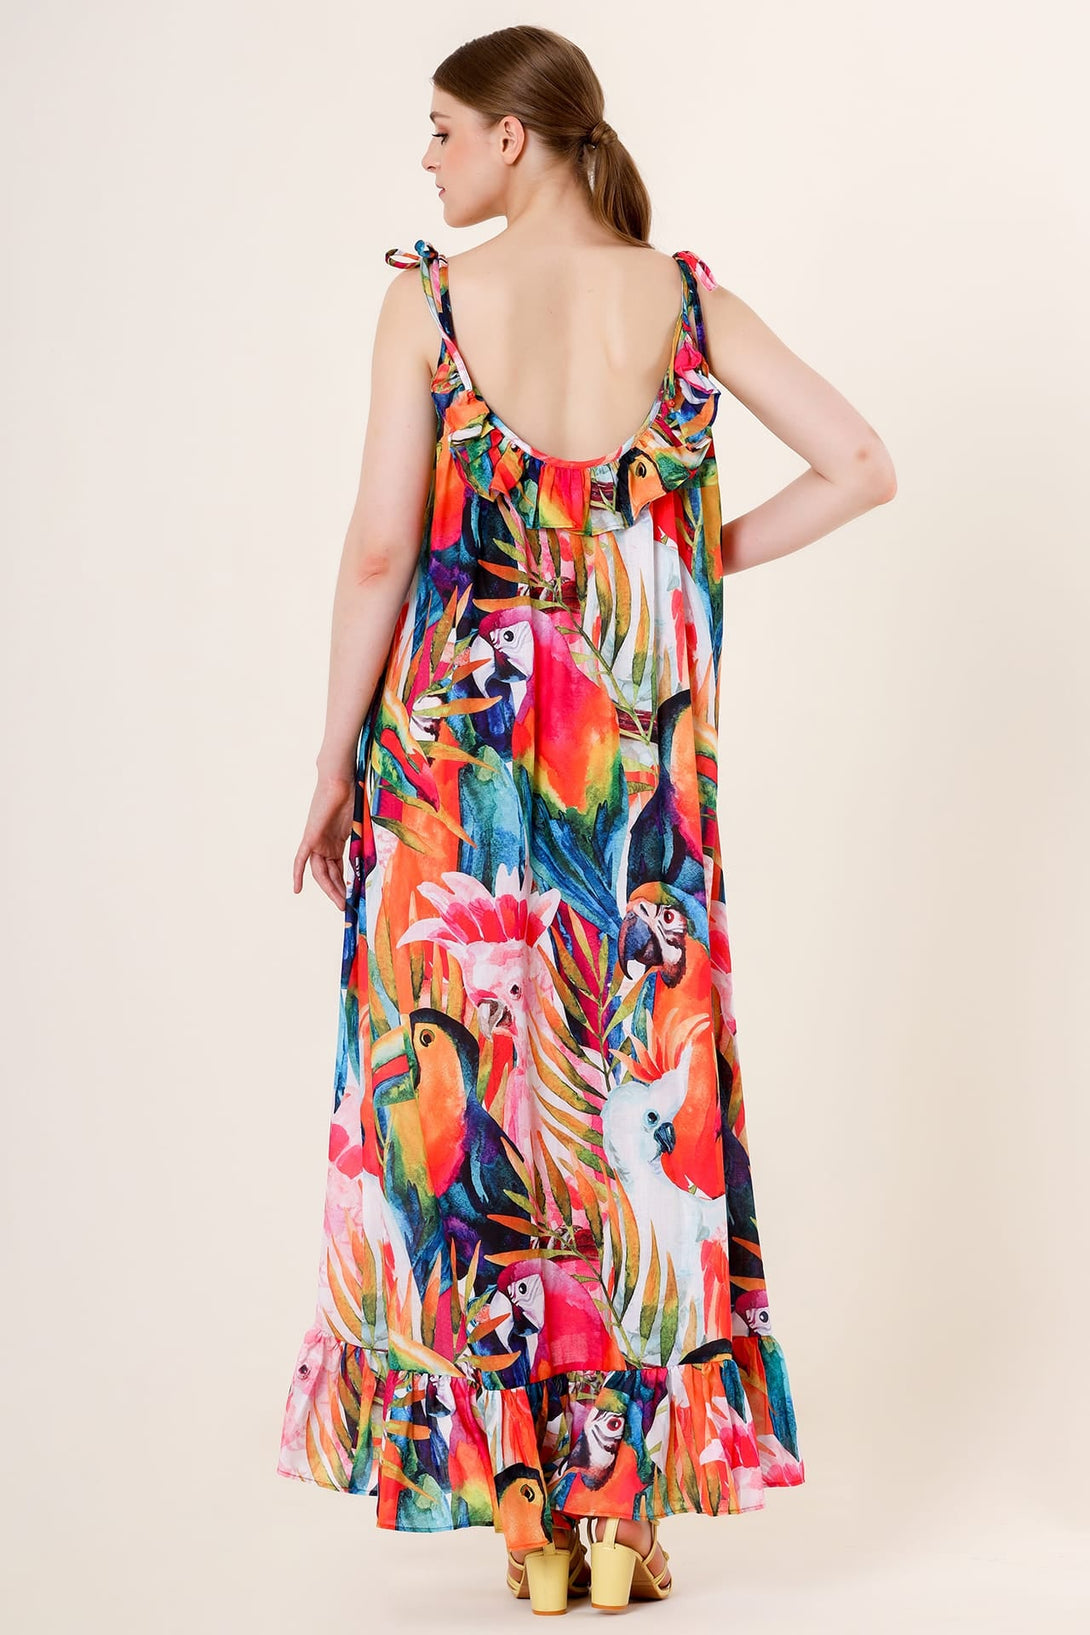 "floor length orange dress" "plus size maxi dresses" "orange summer maxi dress" "maxi printed dress"